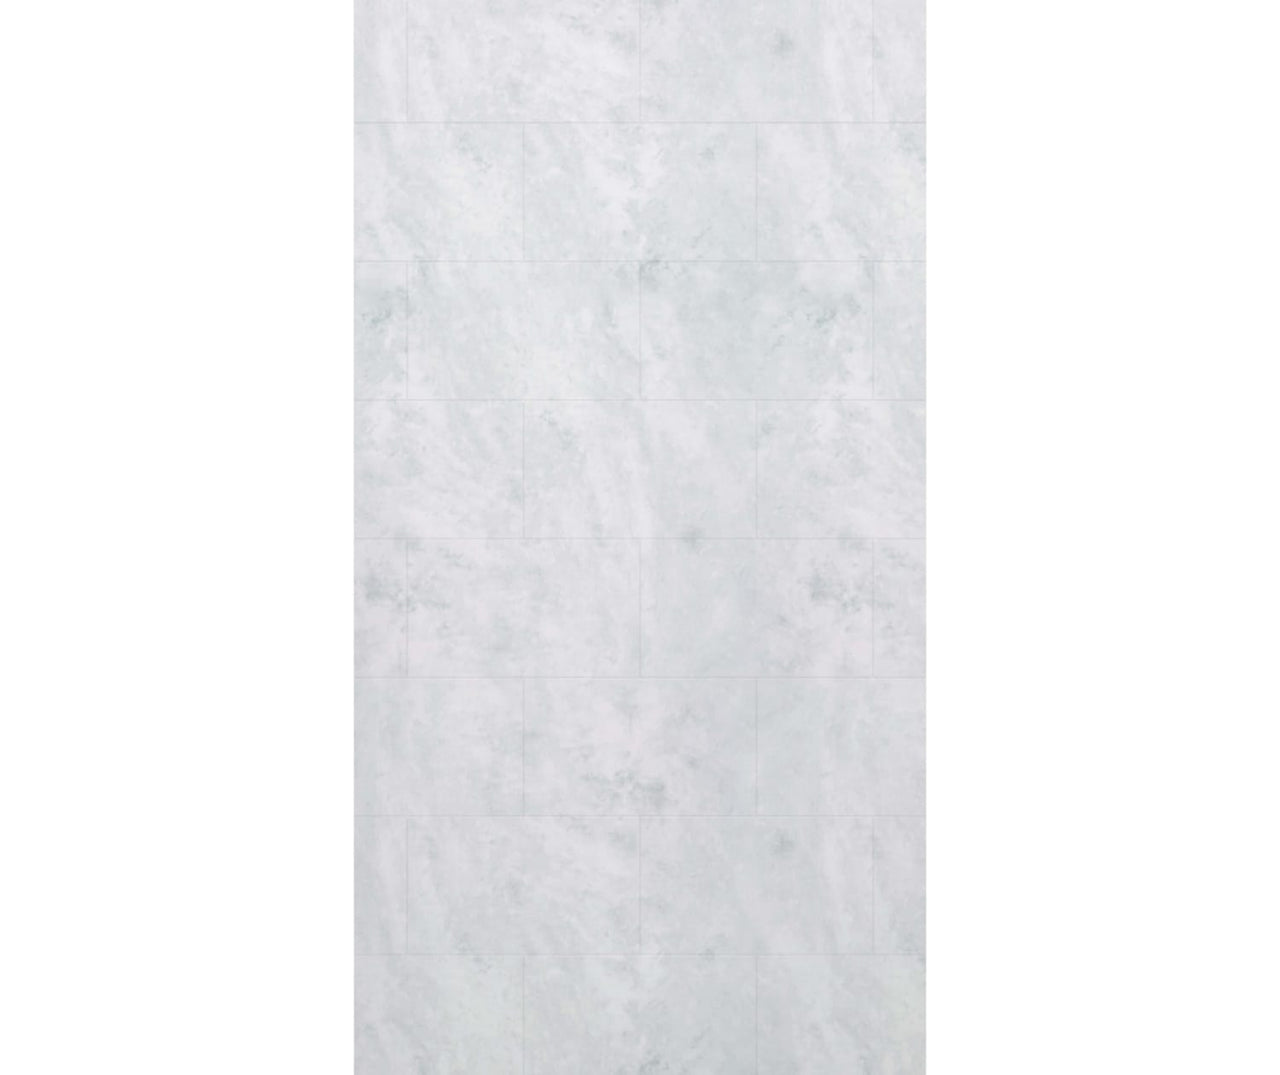 TSMK-9638-1 38 x 96 Swanstone Traditional Subway Tile Glue up Bathtub and Shower Single Wall Panel  - BNGBath